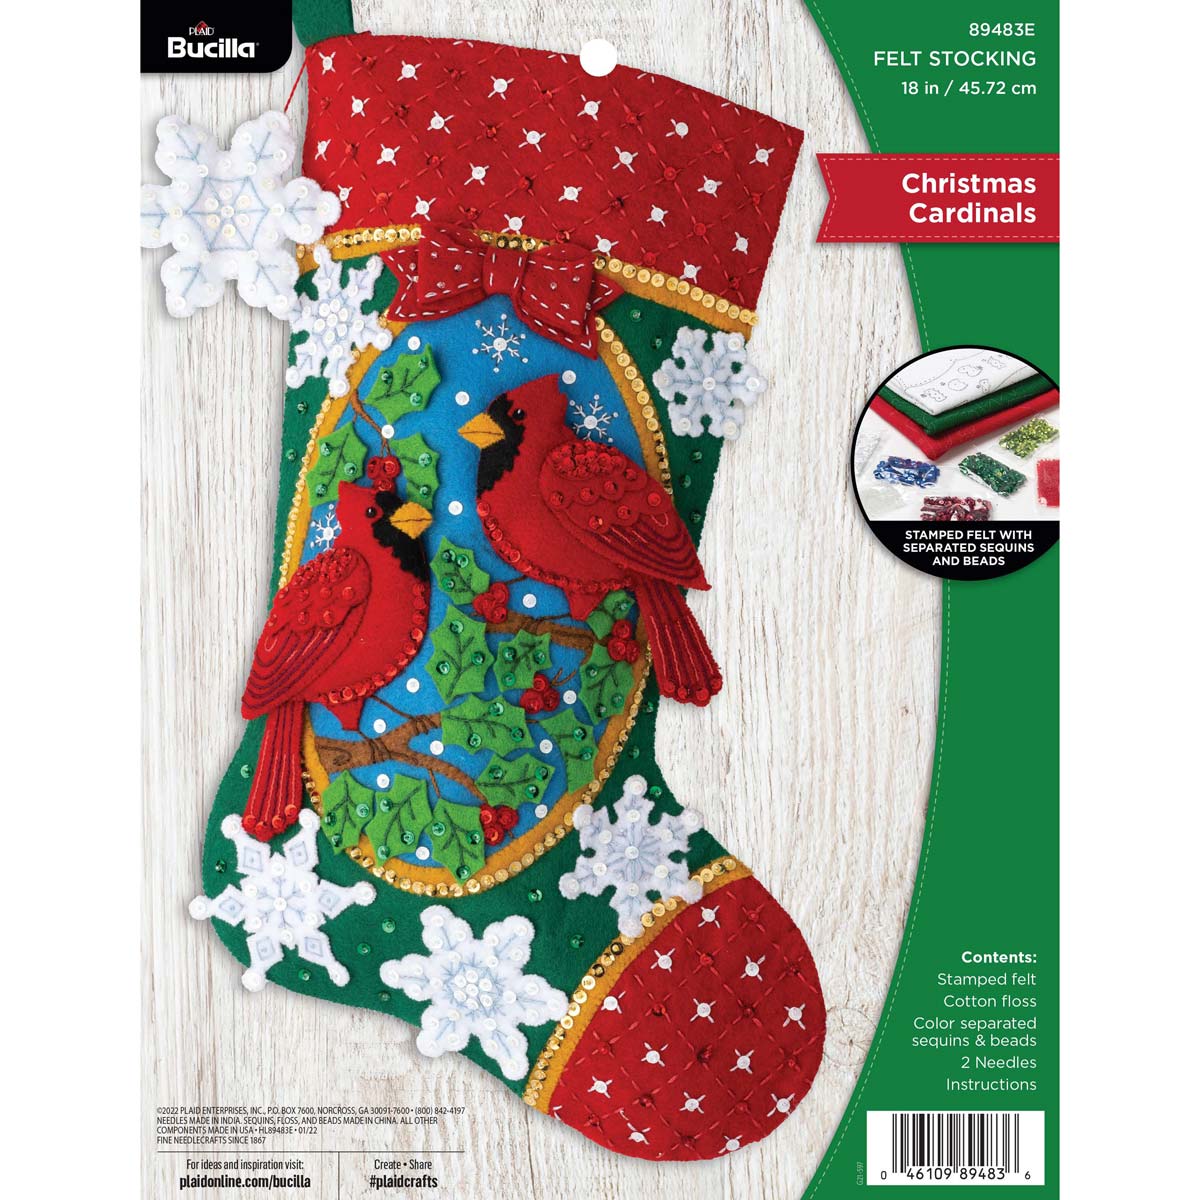 Shop Plaid Bucilla ® Seasonal - Felt - Stocking Kits - Jolly Saint